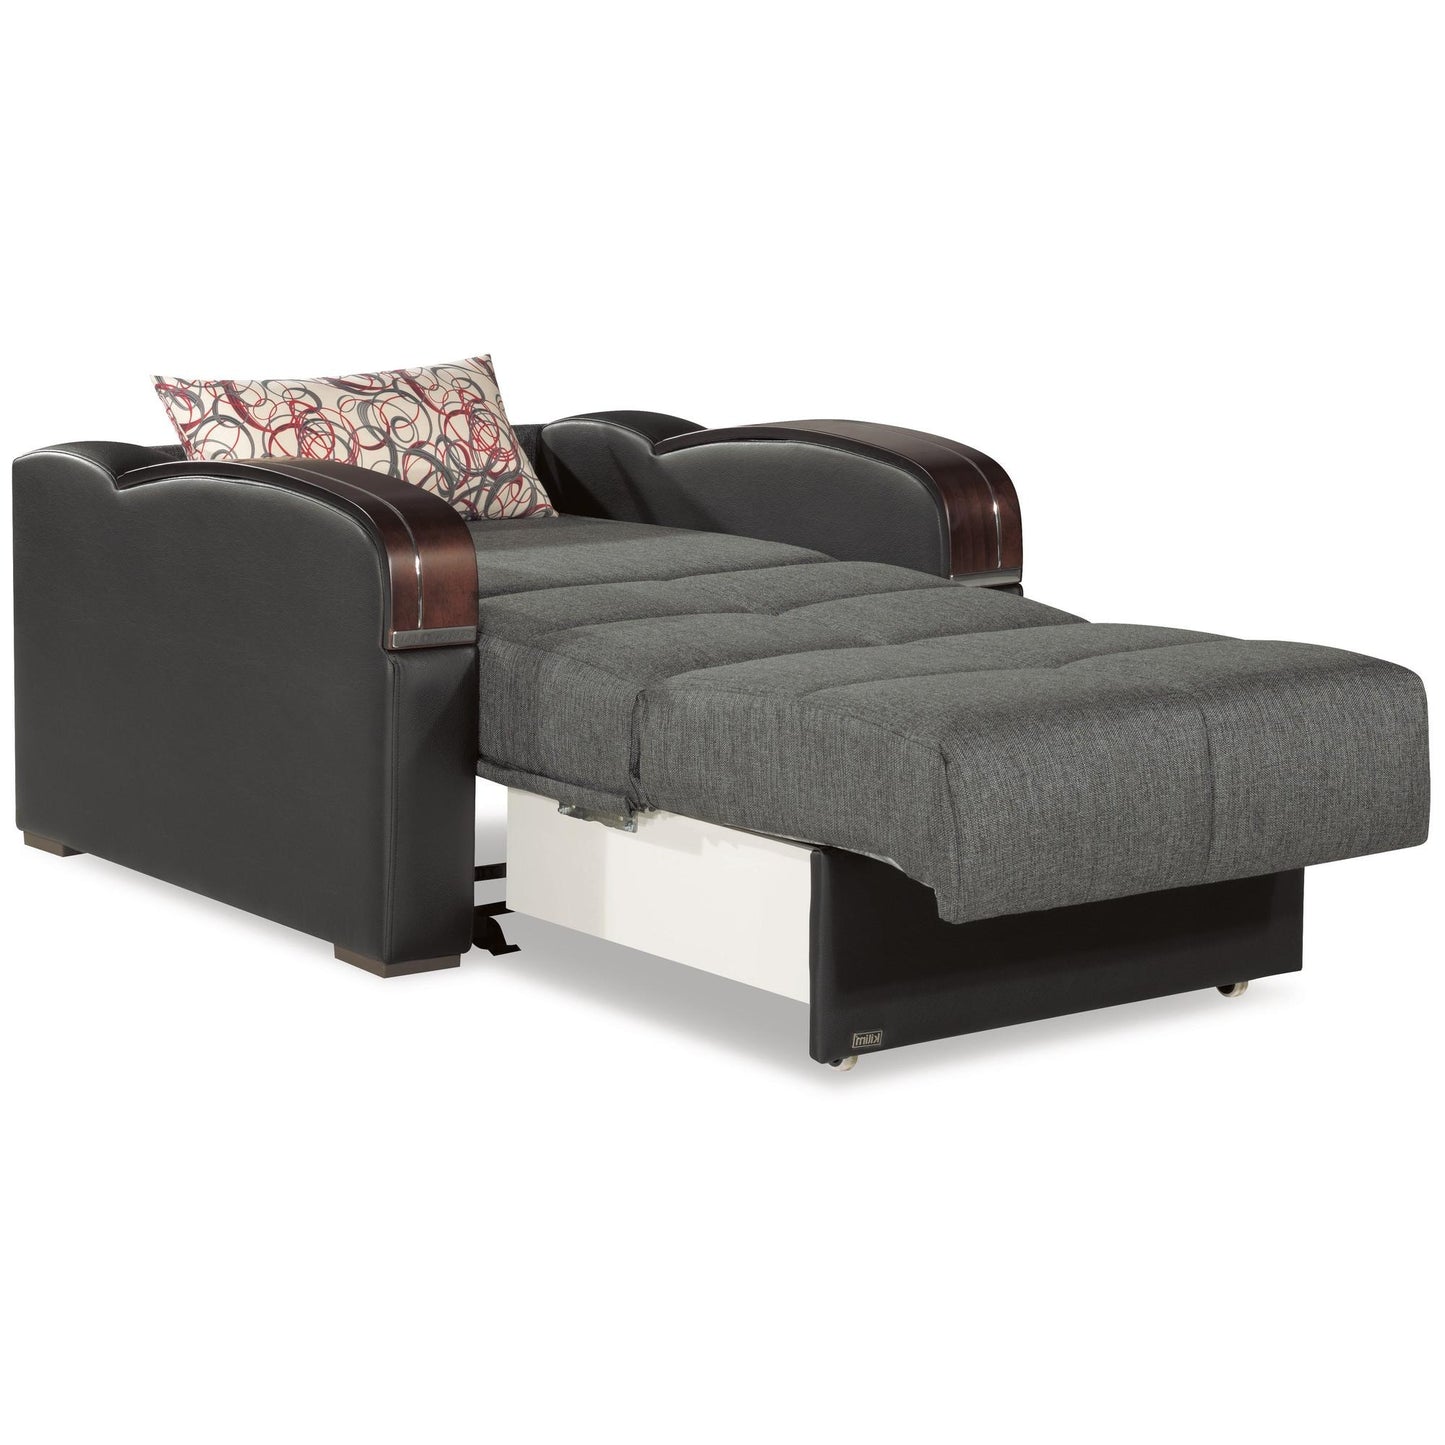 Sleep Plus Convertible Chair in Gray